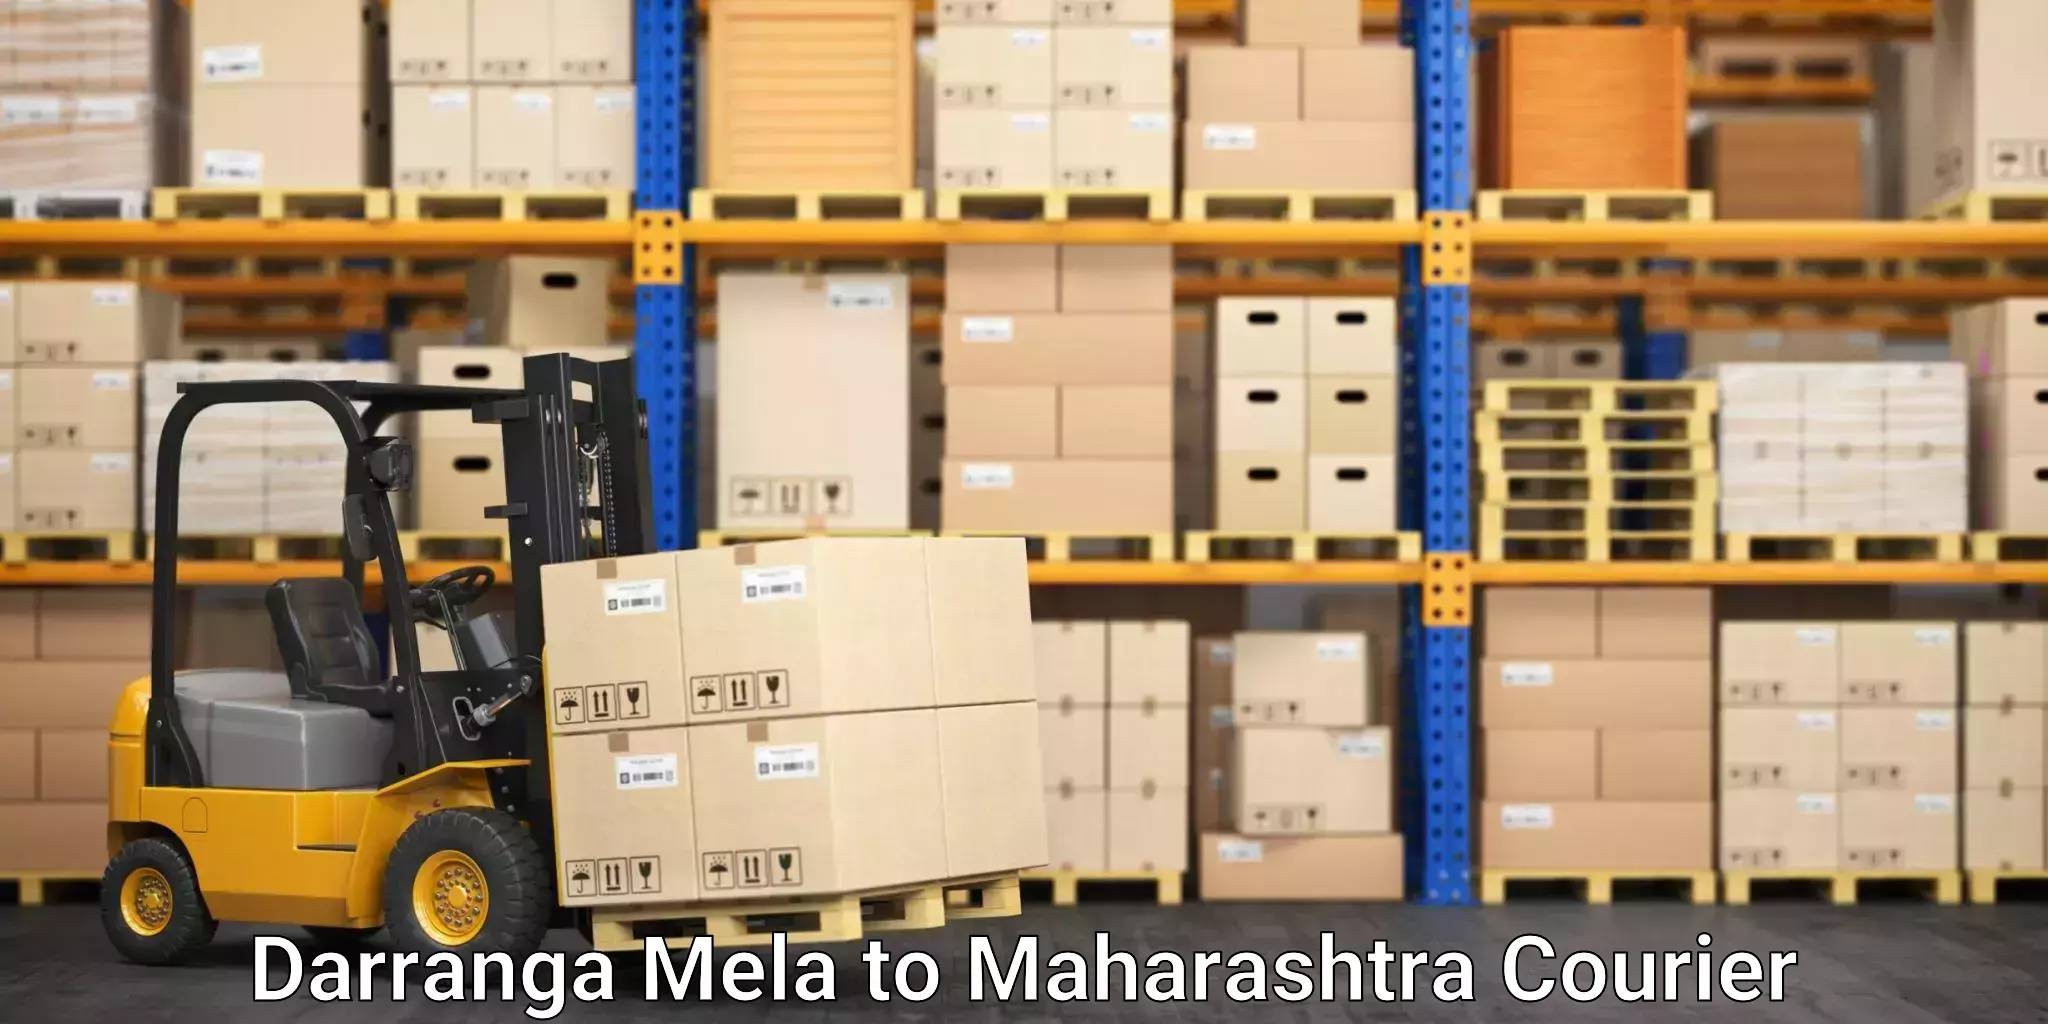 Efficient cargo services Darranga Mela to Lonavala